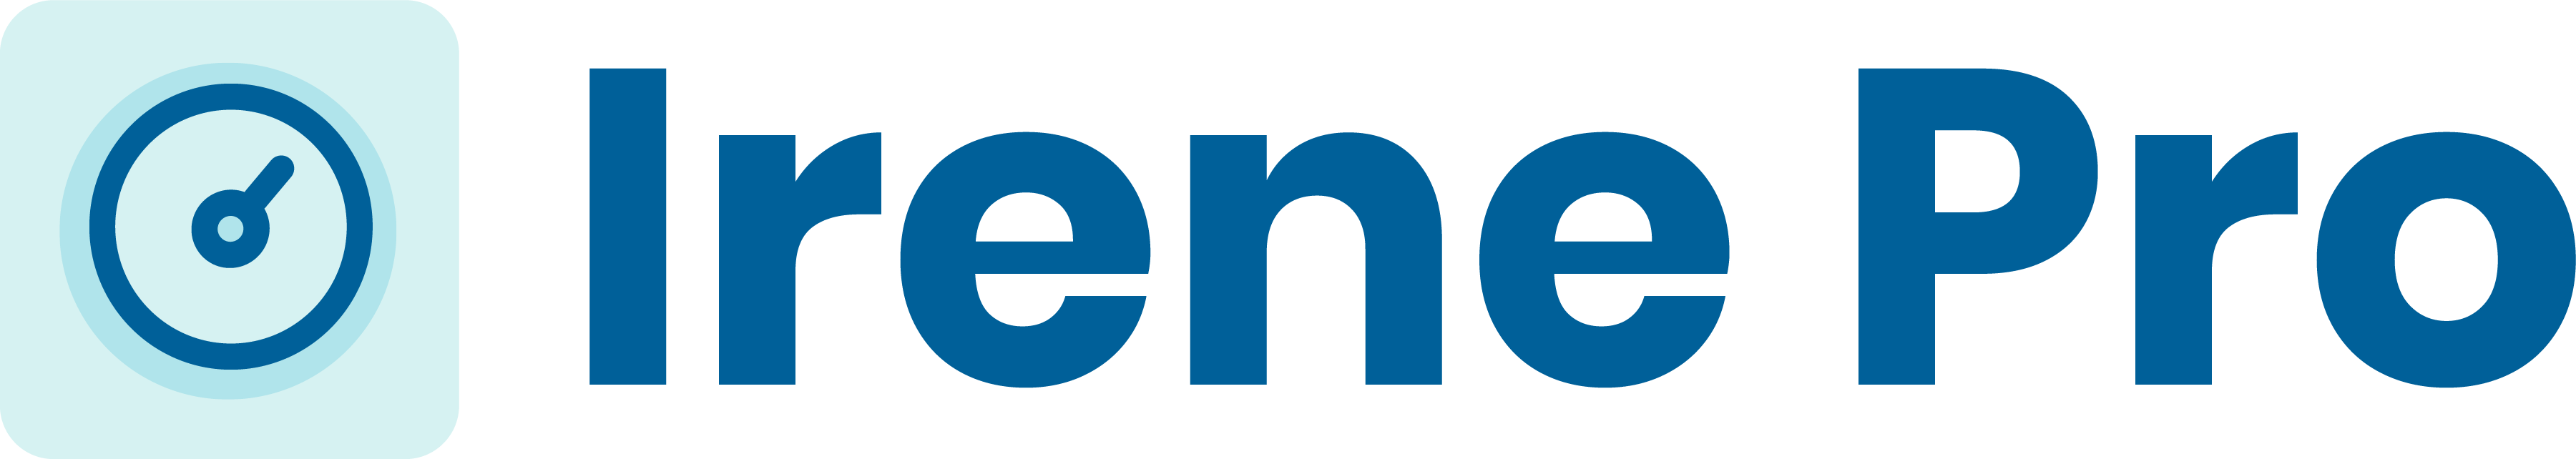 Logo Irene Pro Kiwa.png